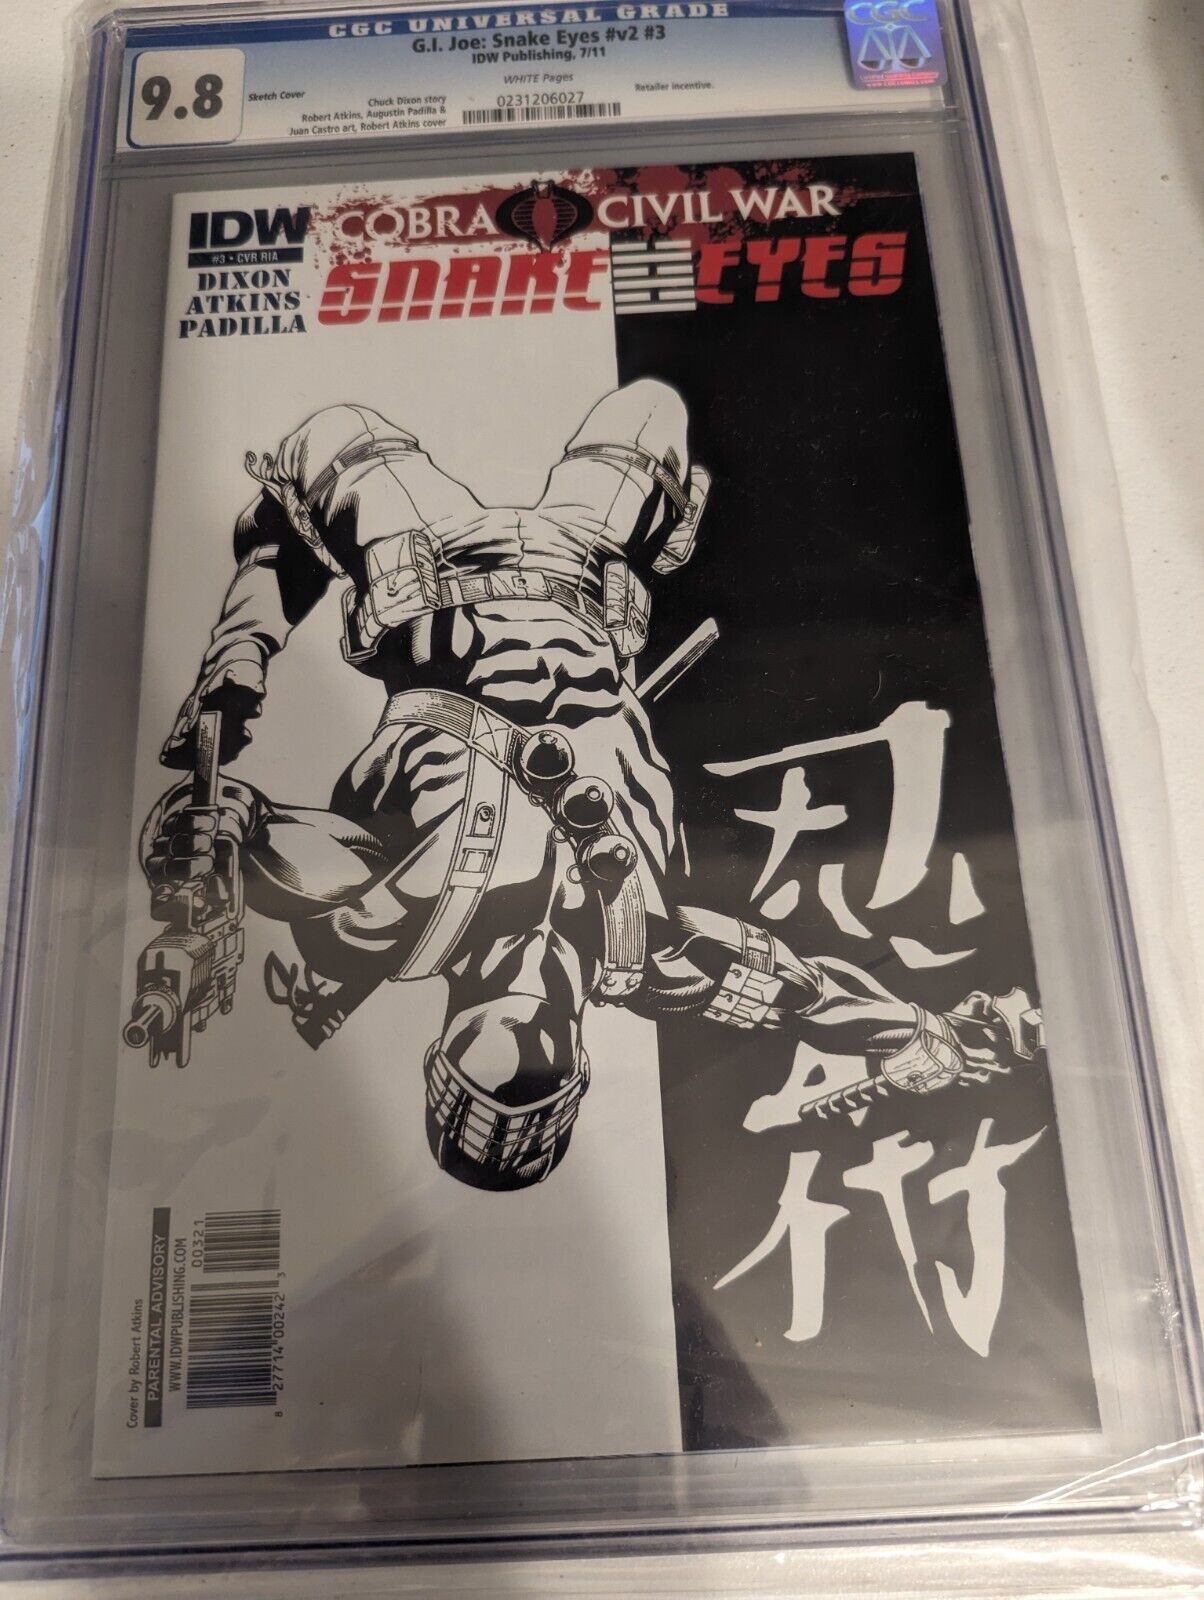 G.I. Joe: Snake Eyes v2 #3 IDW Robert Atkins Retailer Incentive Sketch Cover 9.8